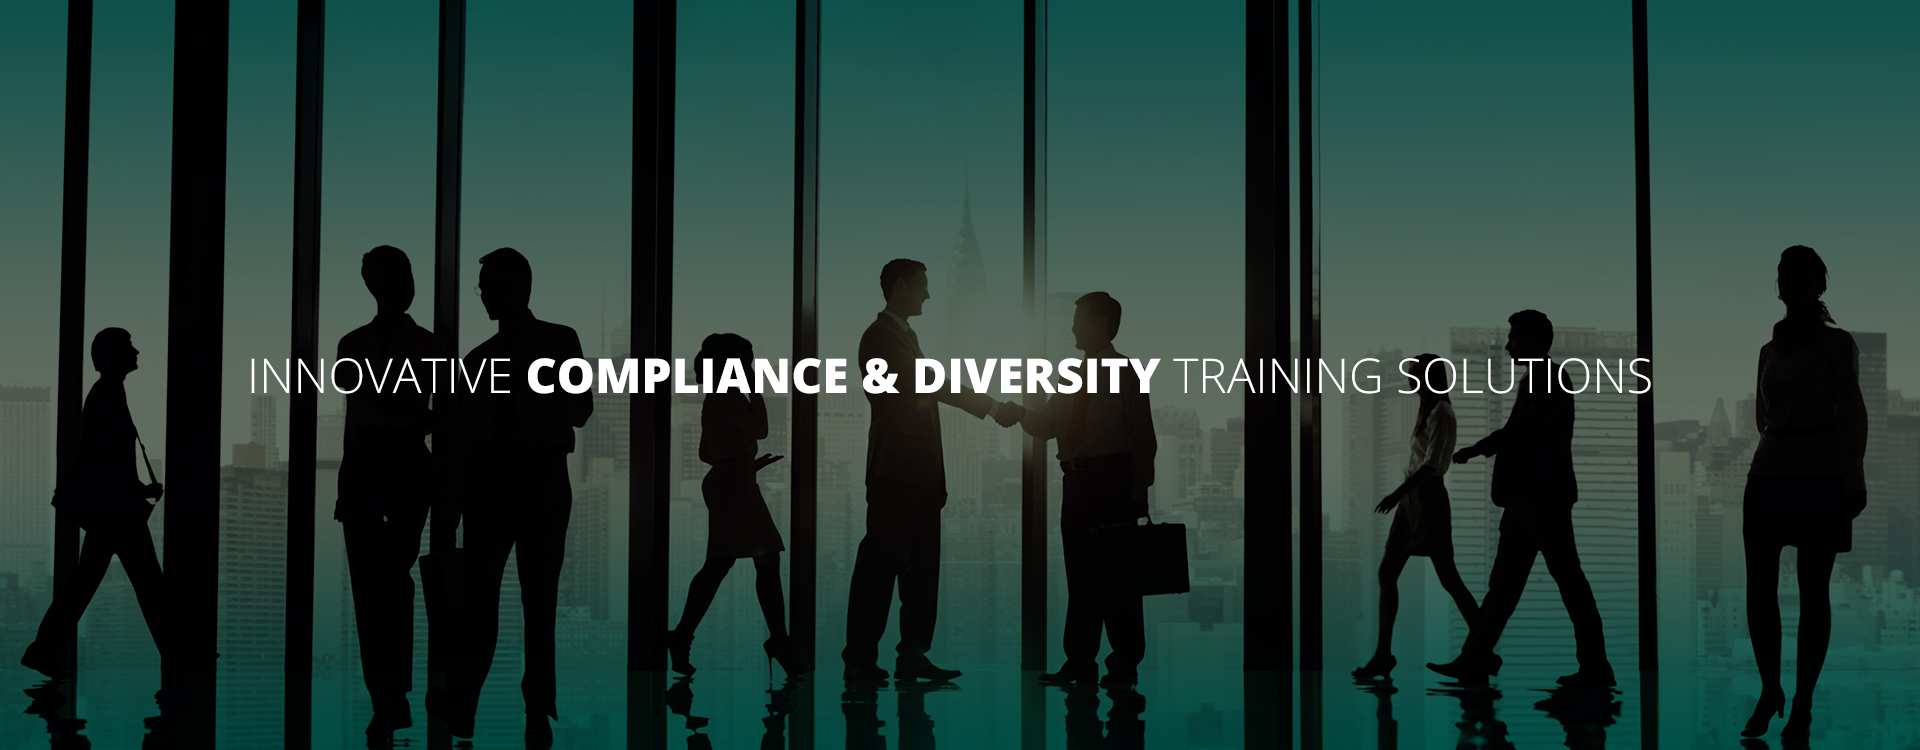 Anderson-davis: Innovative Compliance & Diversity Training Solutions